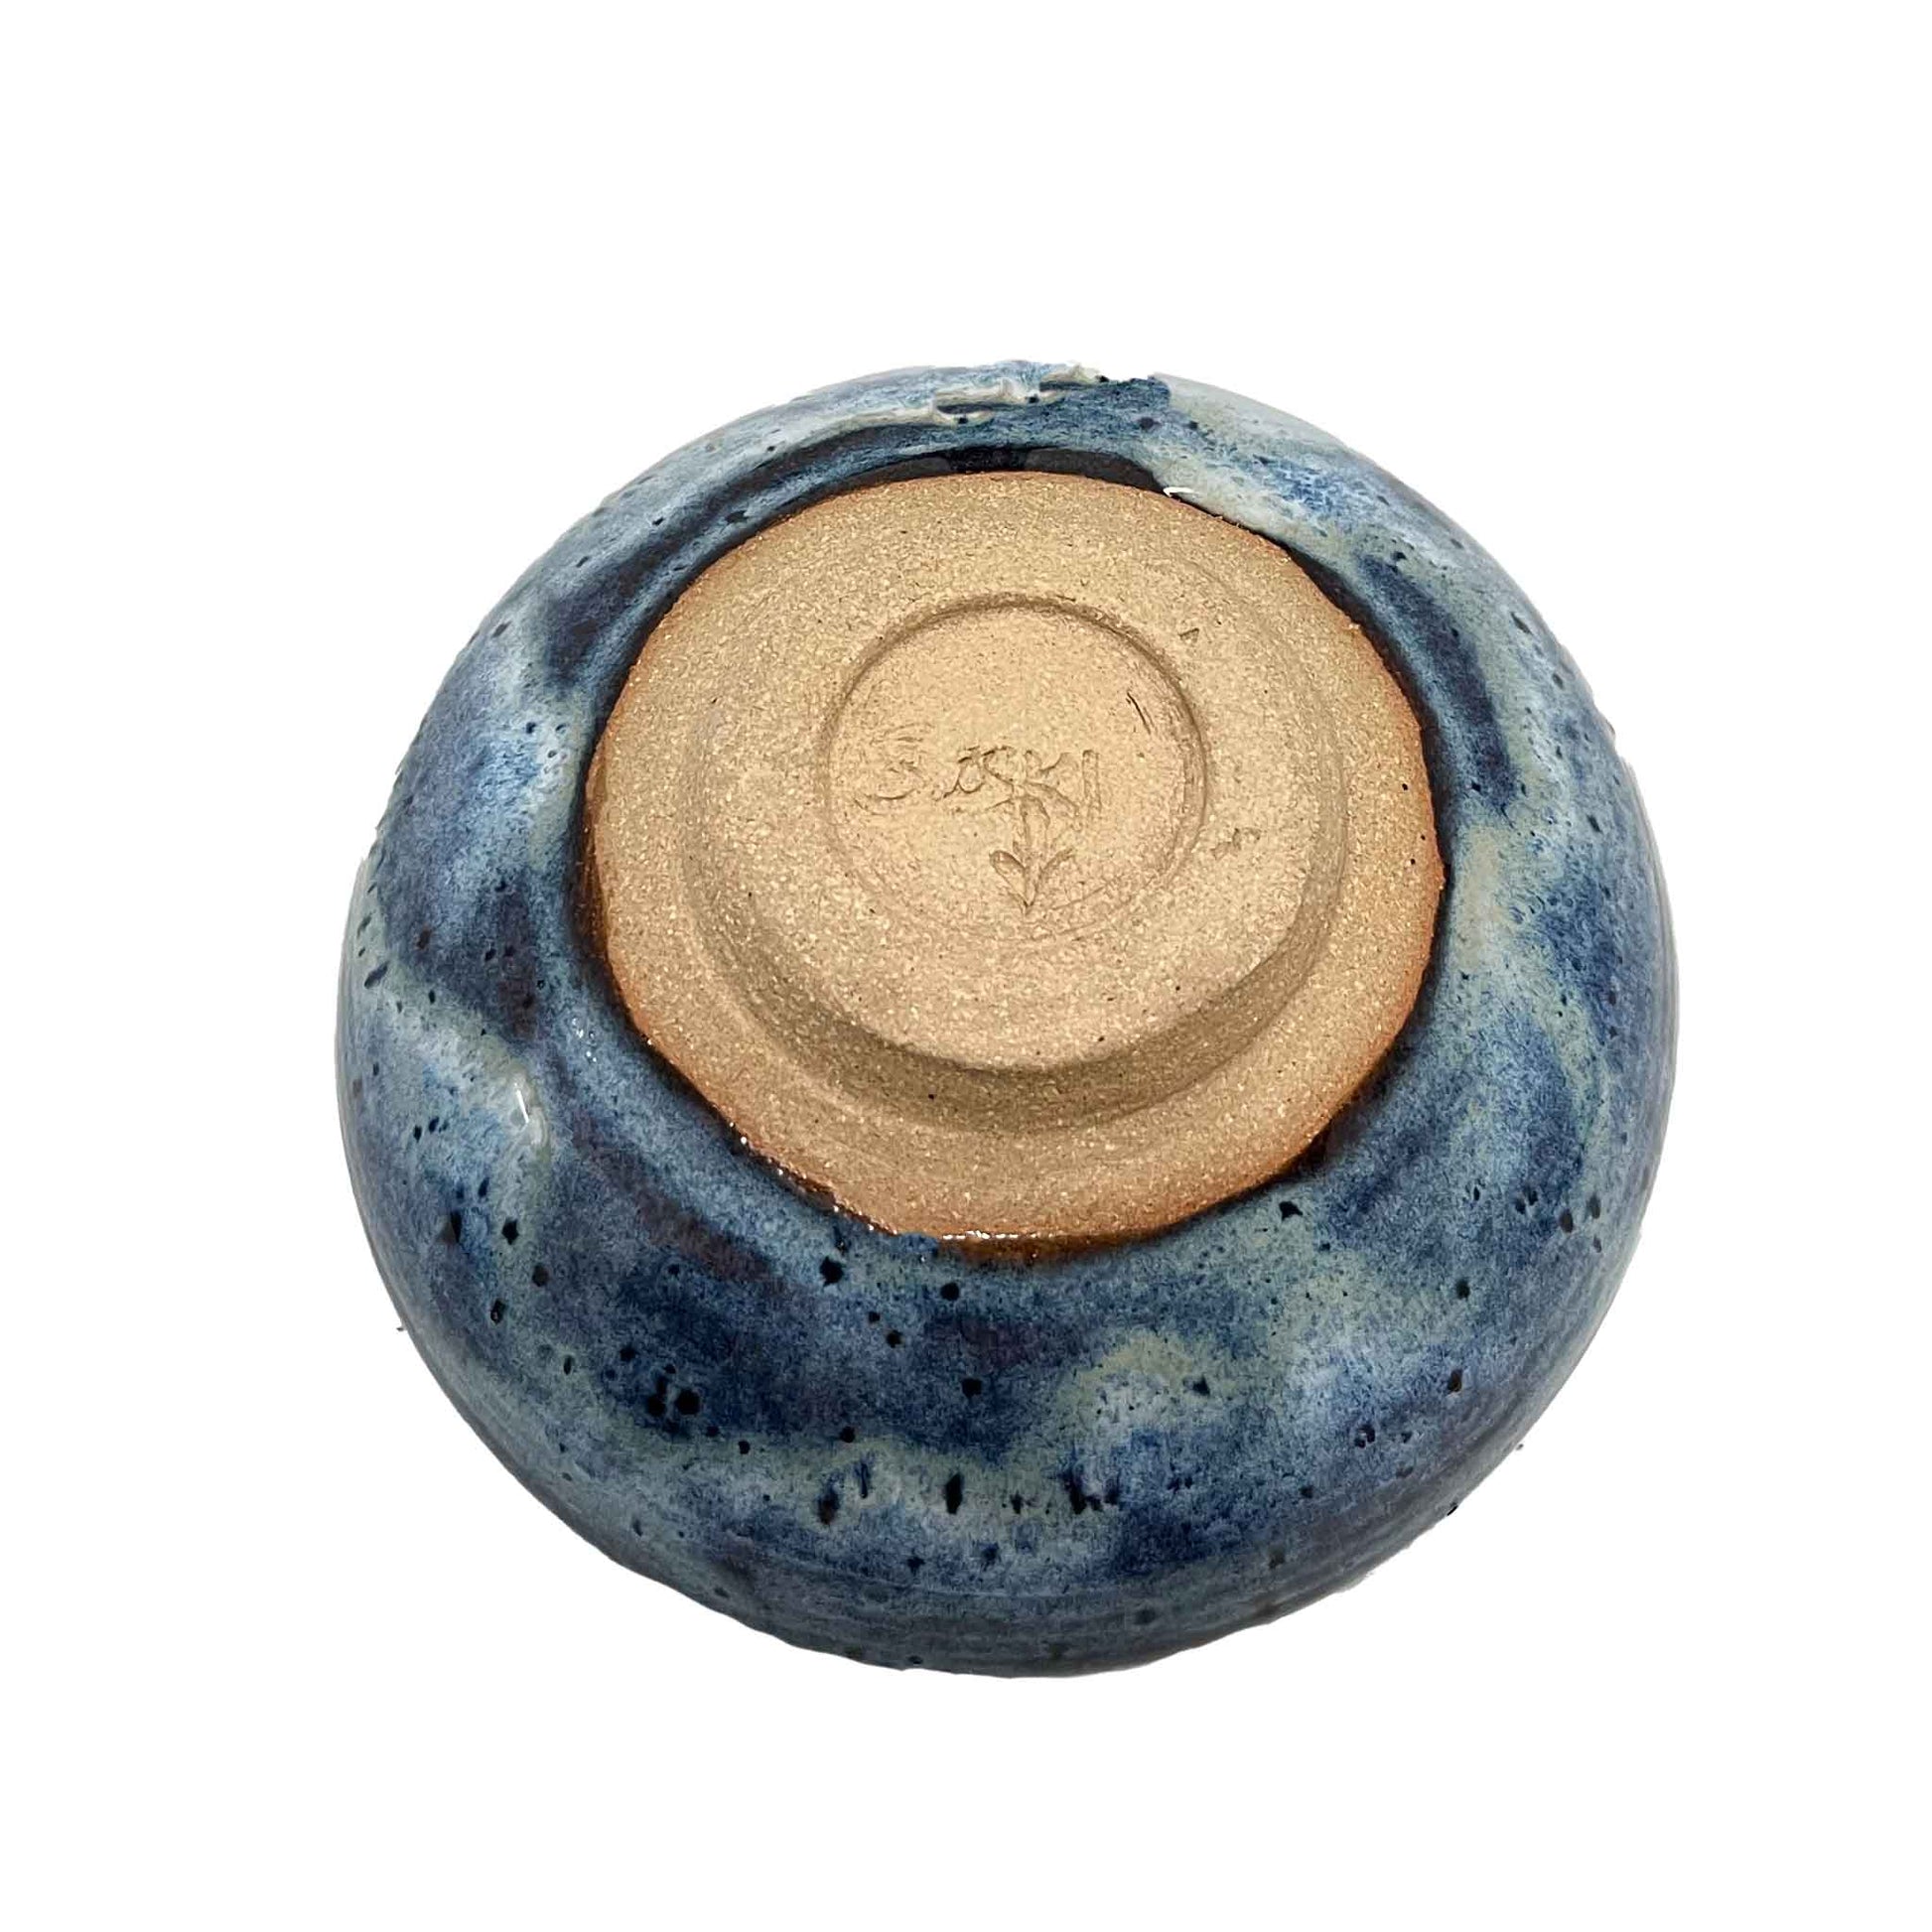 Bottom of SAS Owl Hand Painted Stoneware Bowl